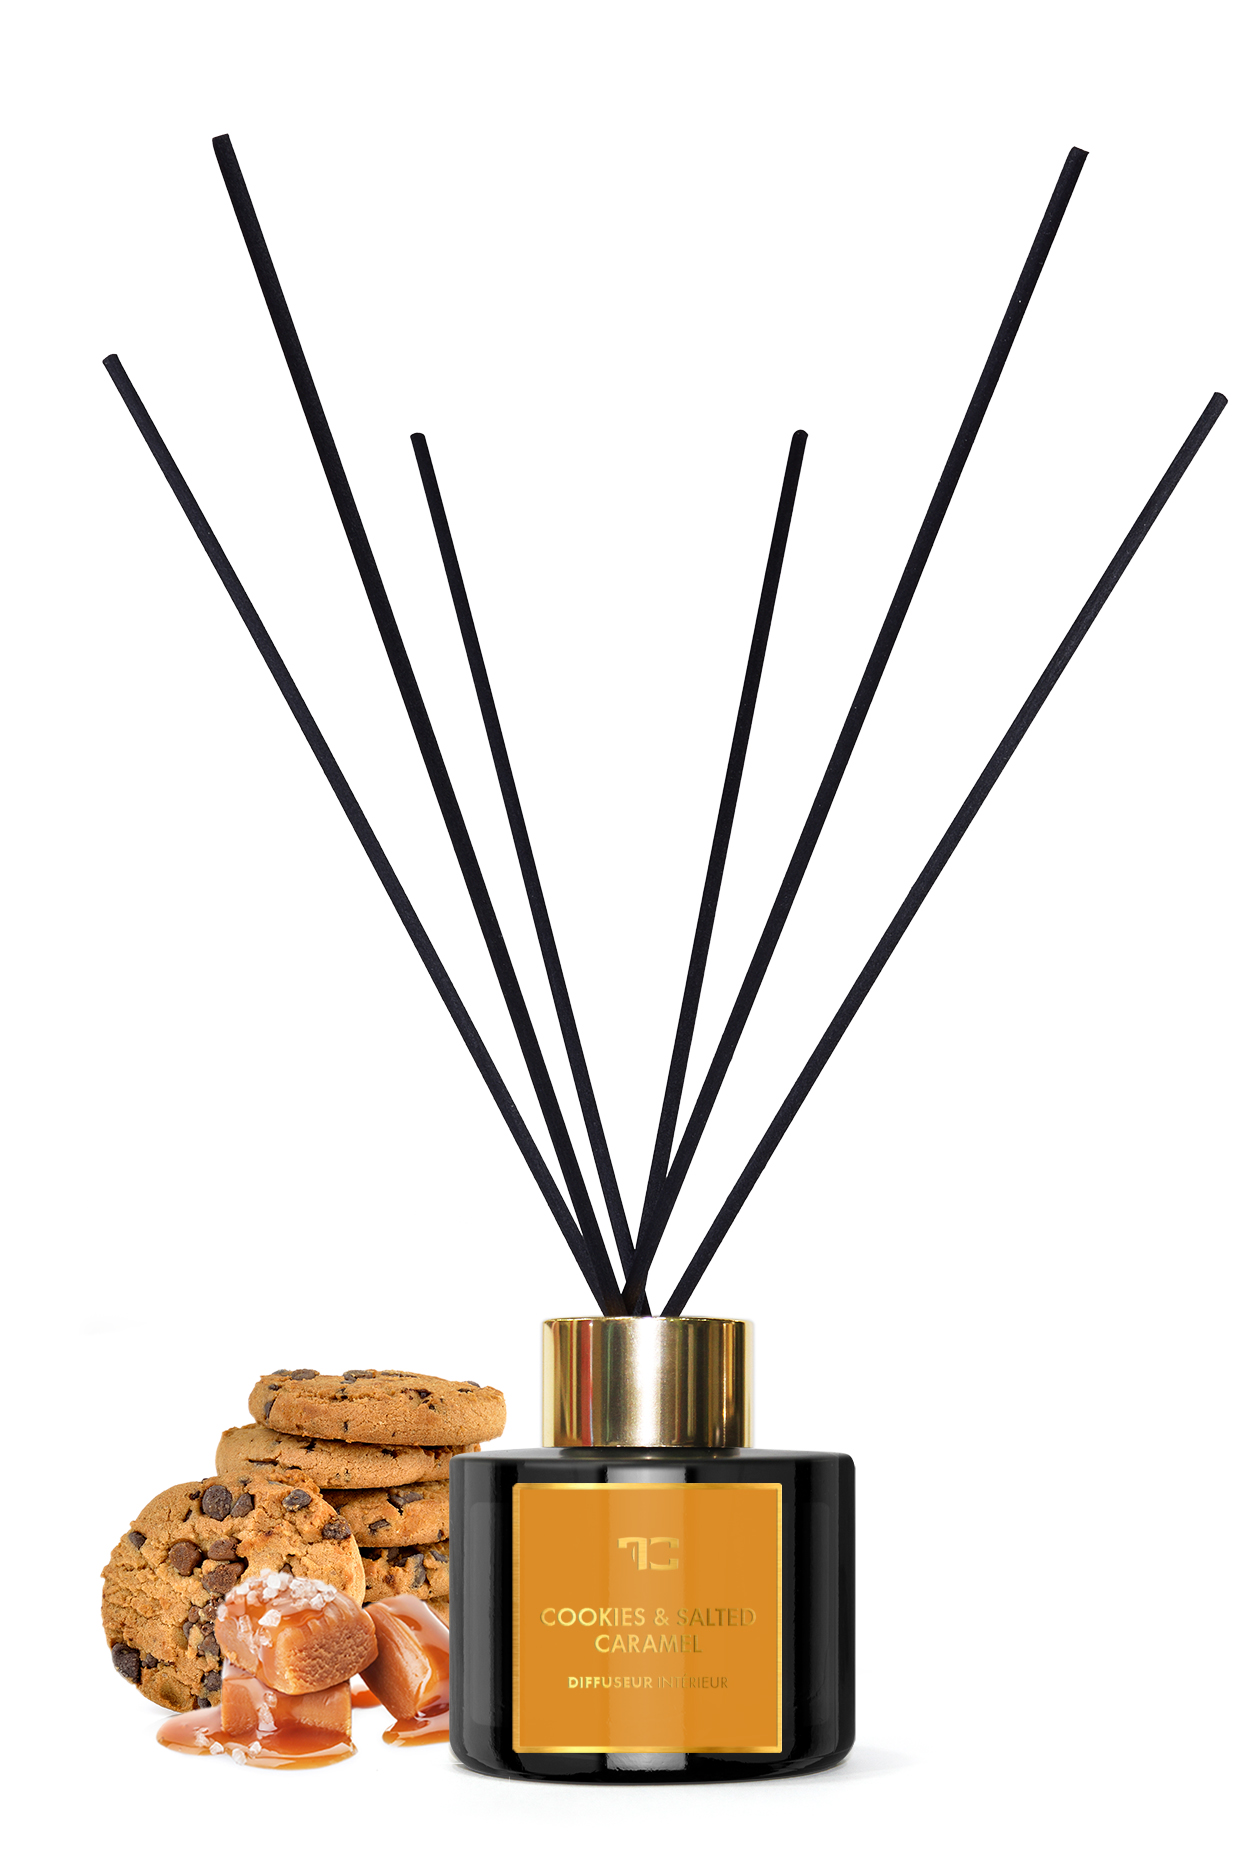 Interiérový tyčinkový bytový parfém COOKIES & SALTED CARAMEL DIFFUSEUR INTÉRIEUR